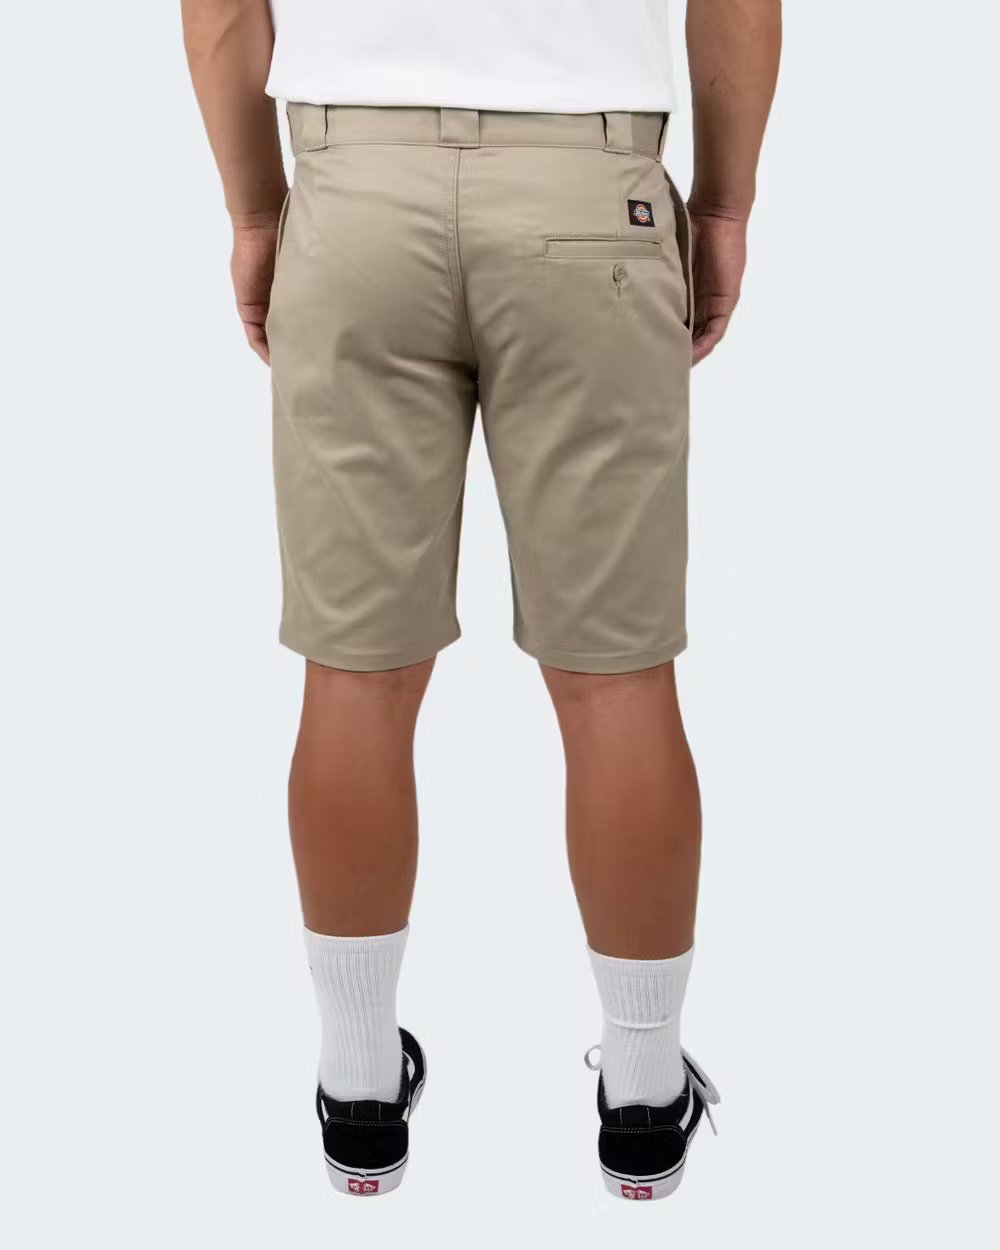 DICKIES 818 Slim Fit 10 Shorts - Desert Sand - VENUE.